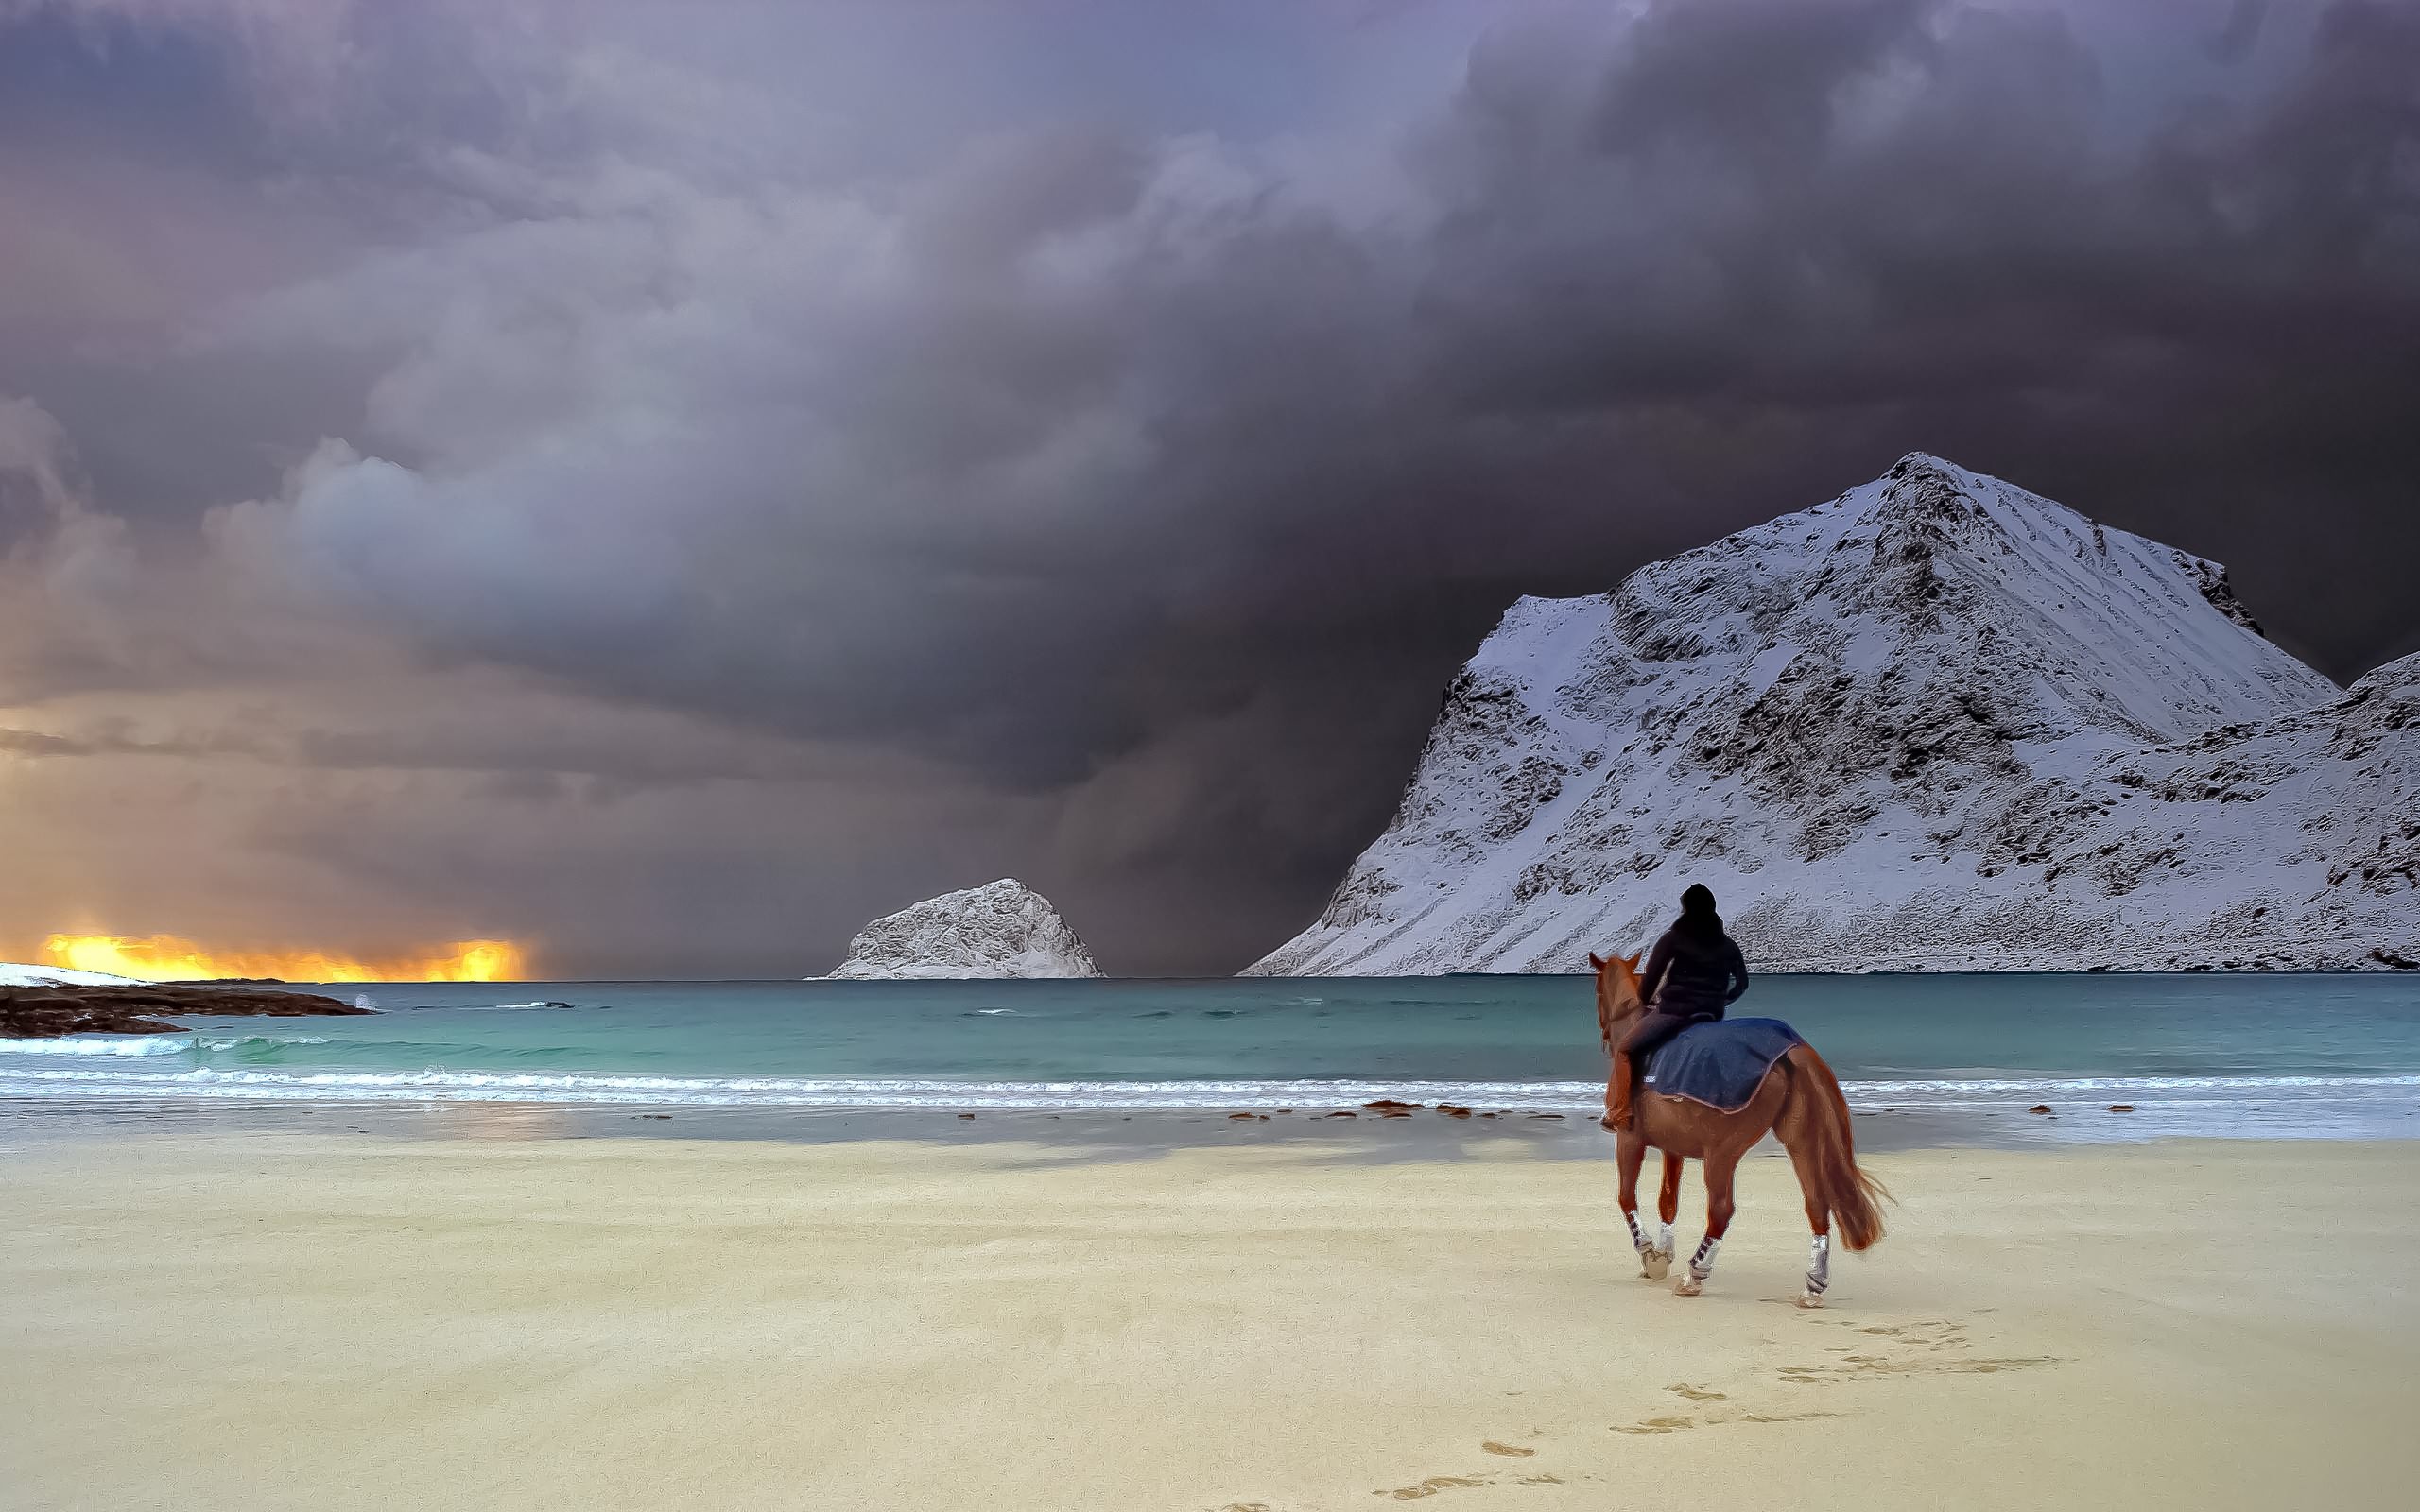 658242 descargar imagen fotografía, equitación, playa, nube, caballo, montaña, océano, mar, atardecer: fondos de pantalla y protectores de pantalla gratis